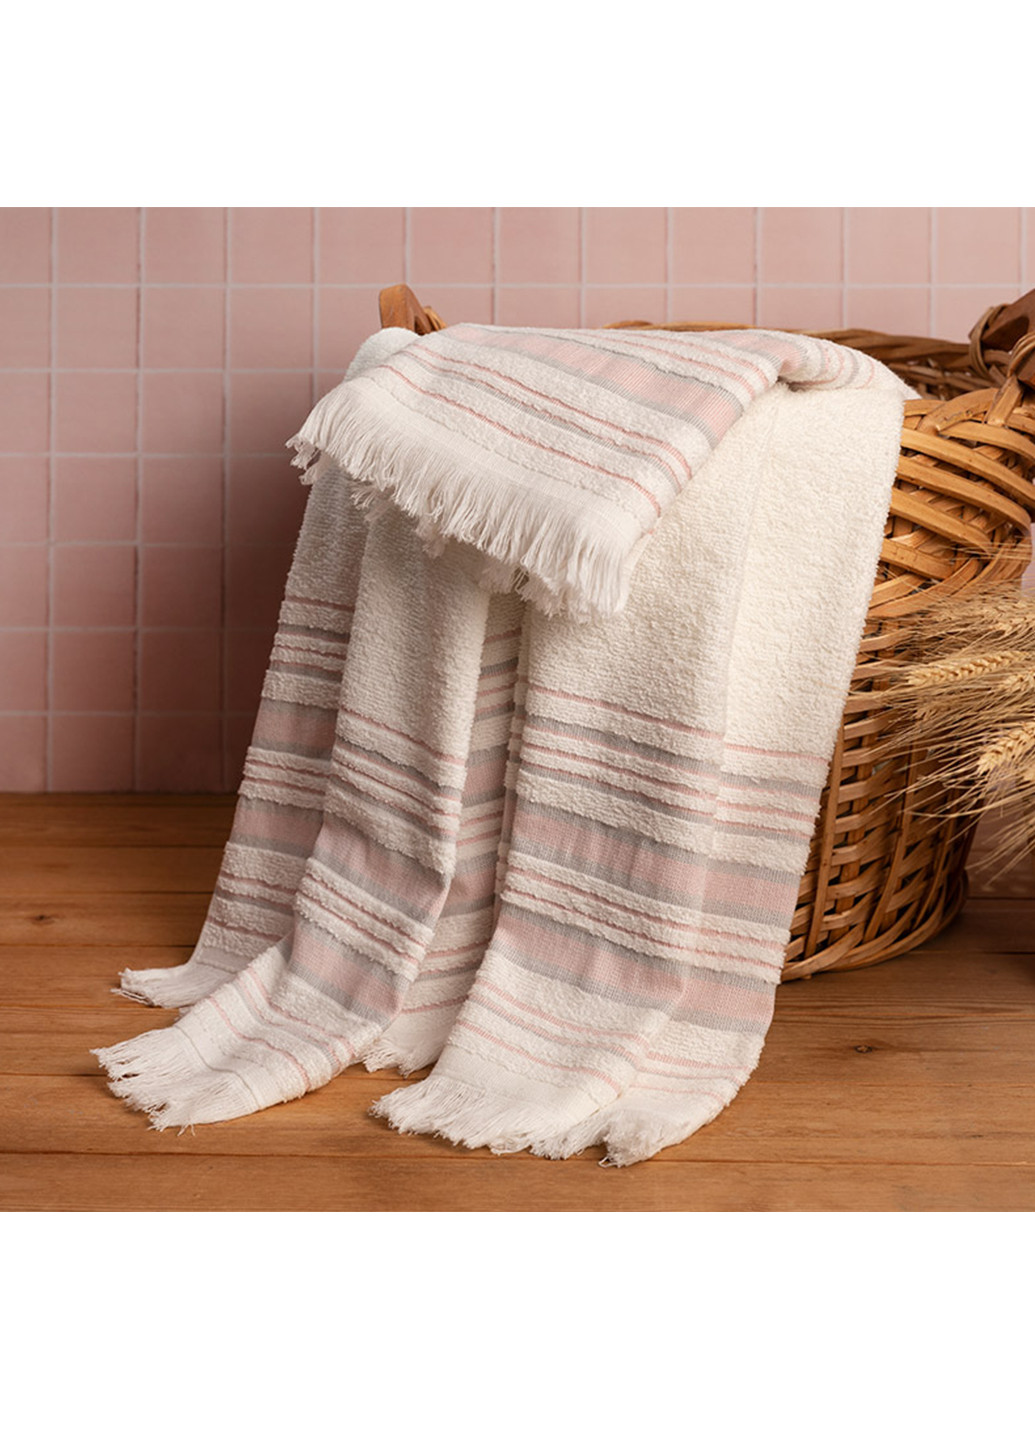 English Home полотенце (2 шт.) полоска розовый производство - Турция